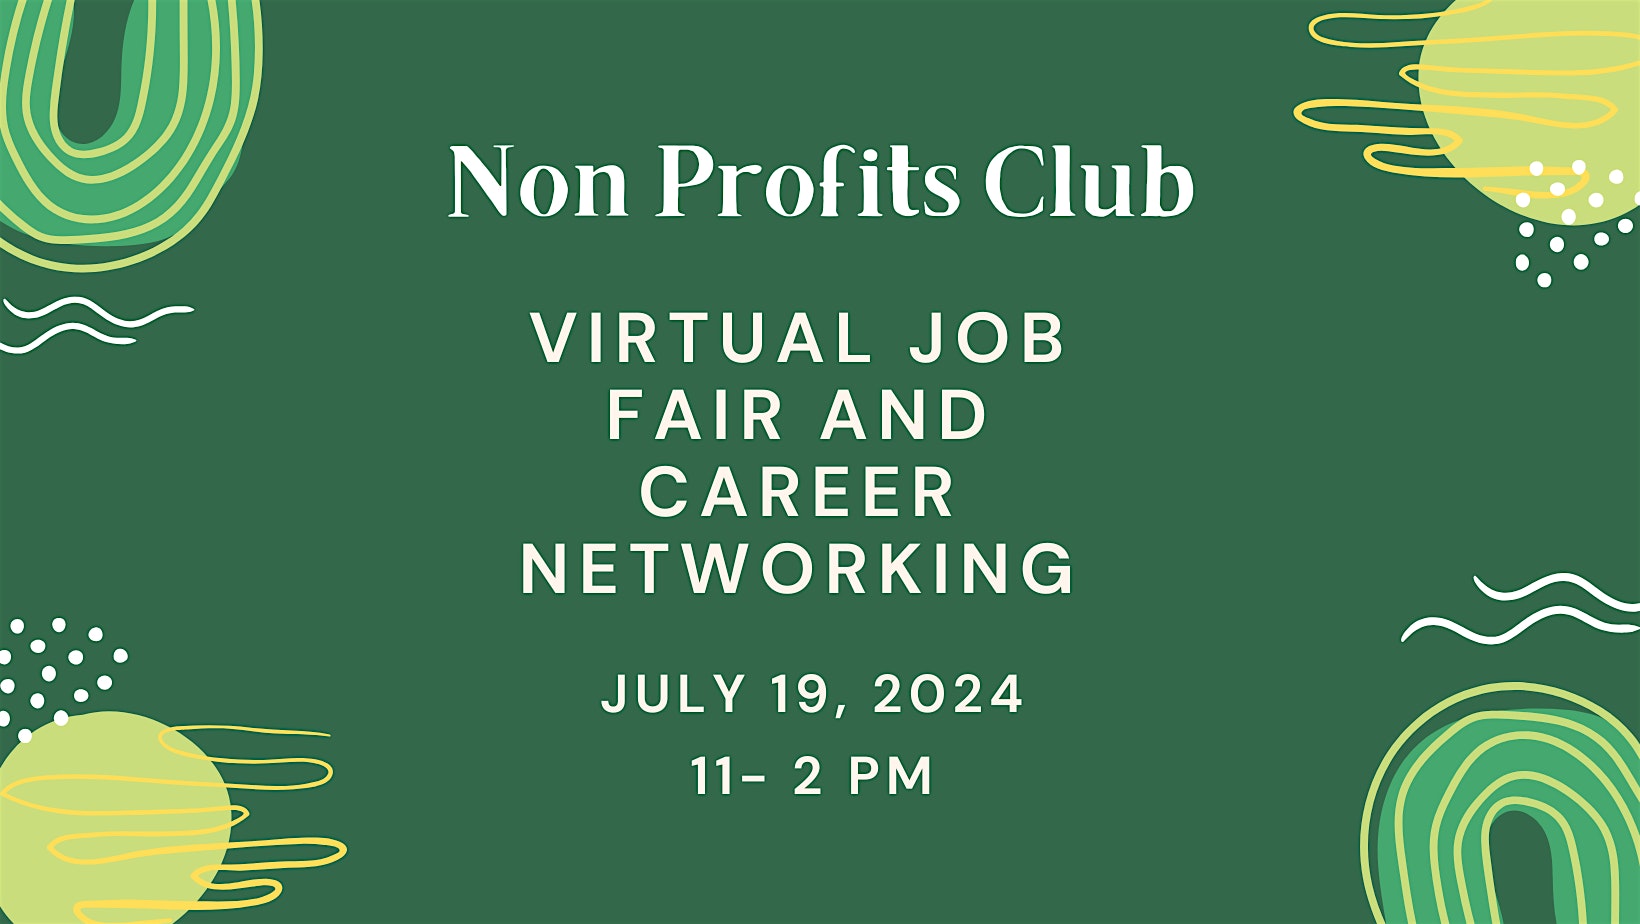 Non Profits Club Virtual Job Fair and Career Networking Event #Oklahoma